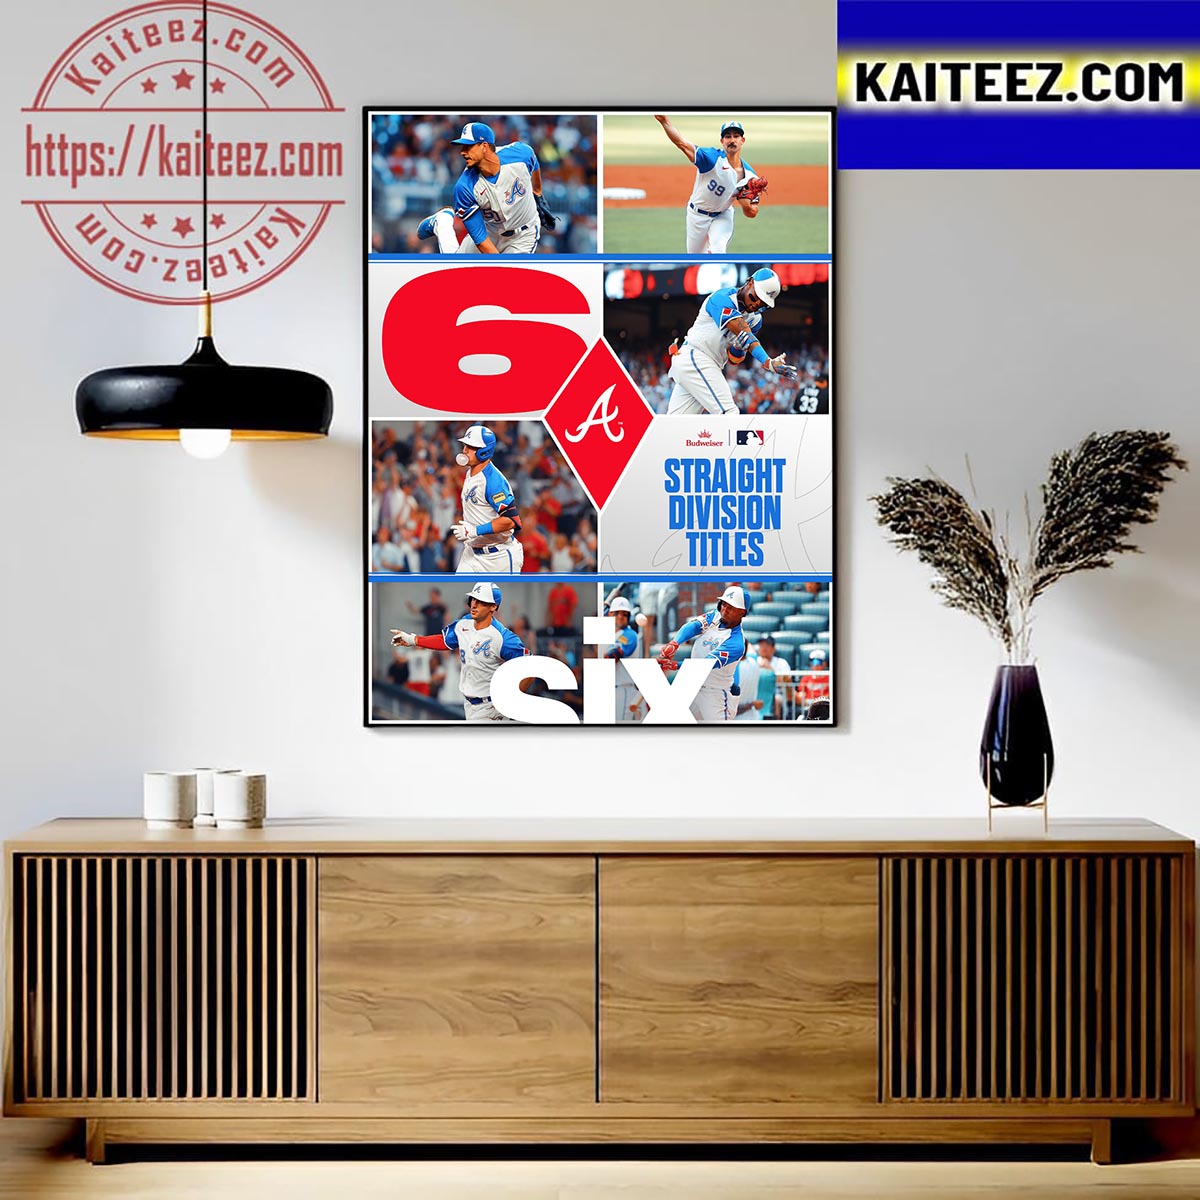 Atlanta Braves Make That 6 Straight Division Titles In MLB Art Decor Poster Canvas